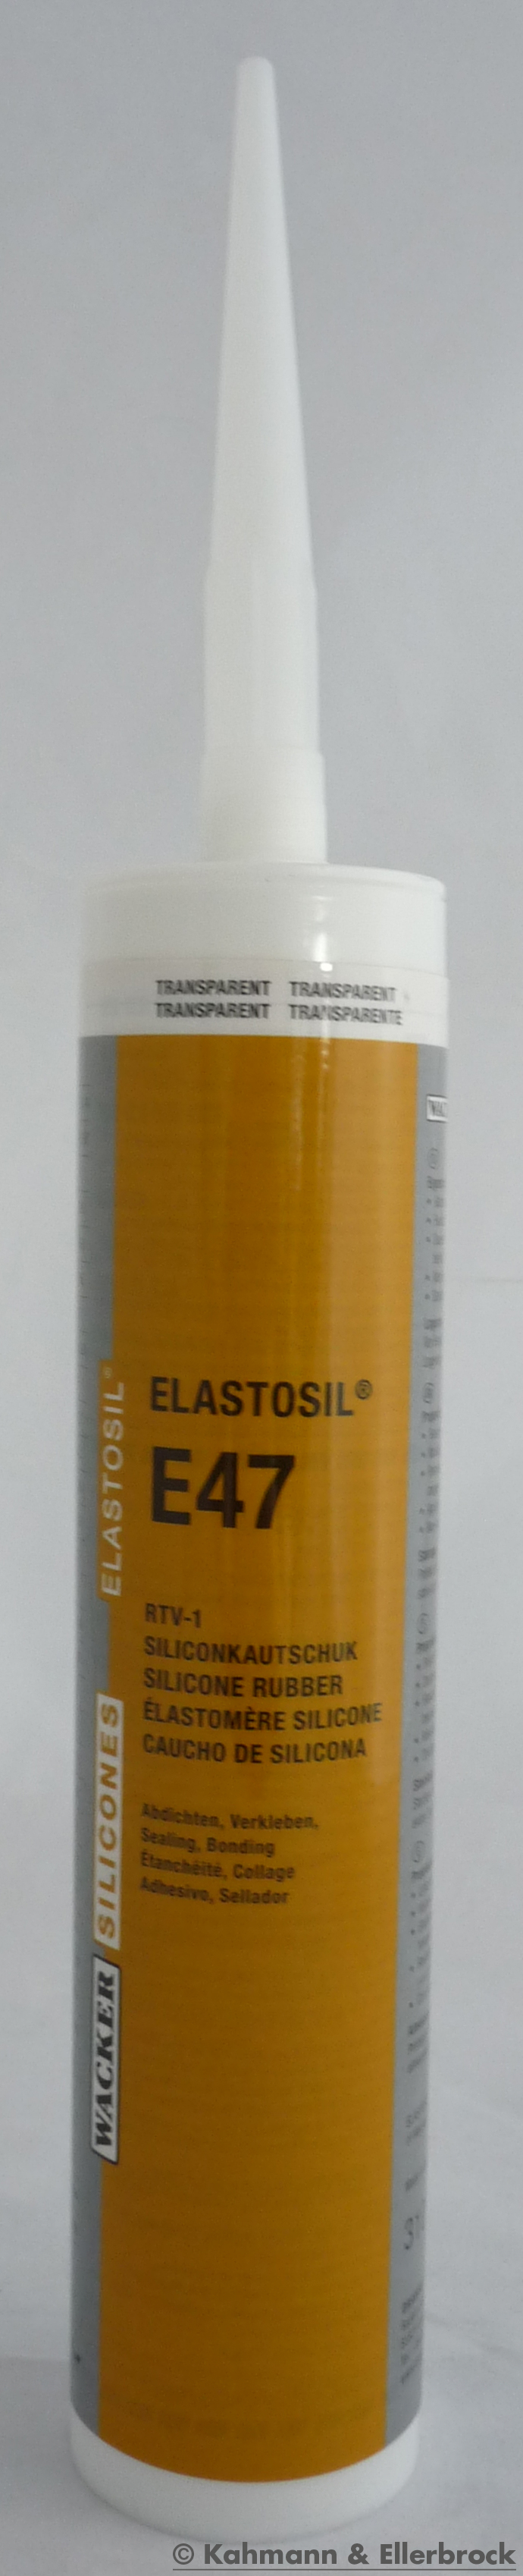 Elastosil E 47